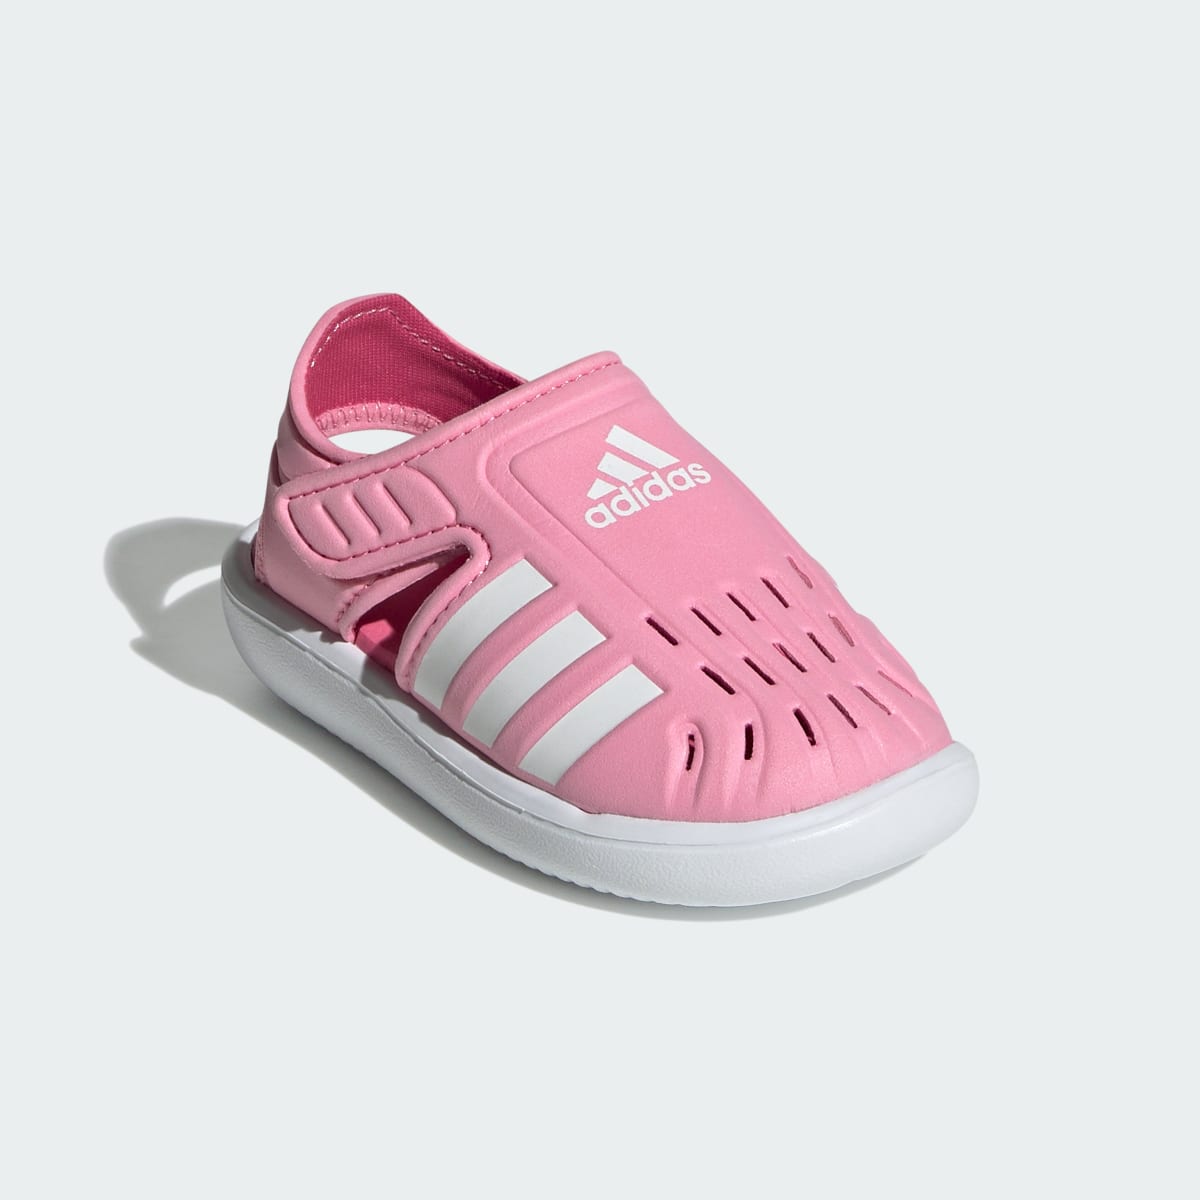 Adidas Closed-Toe Summer Water Sandals. 5